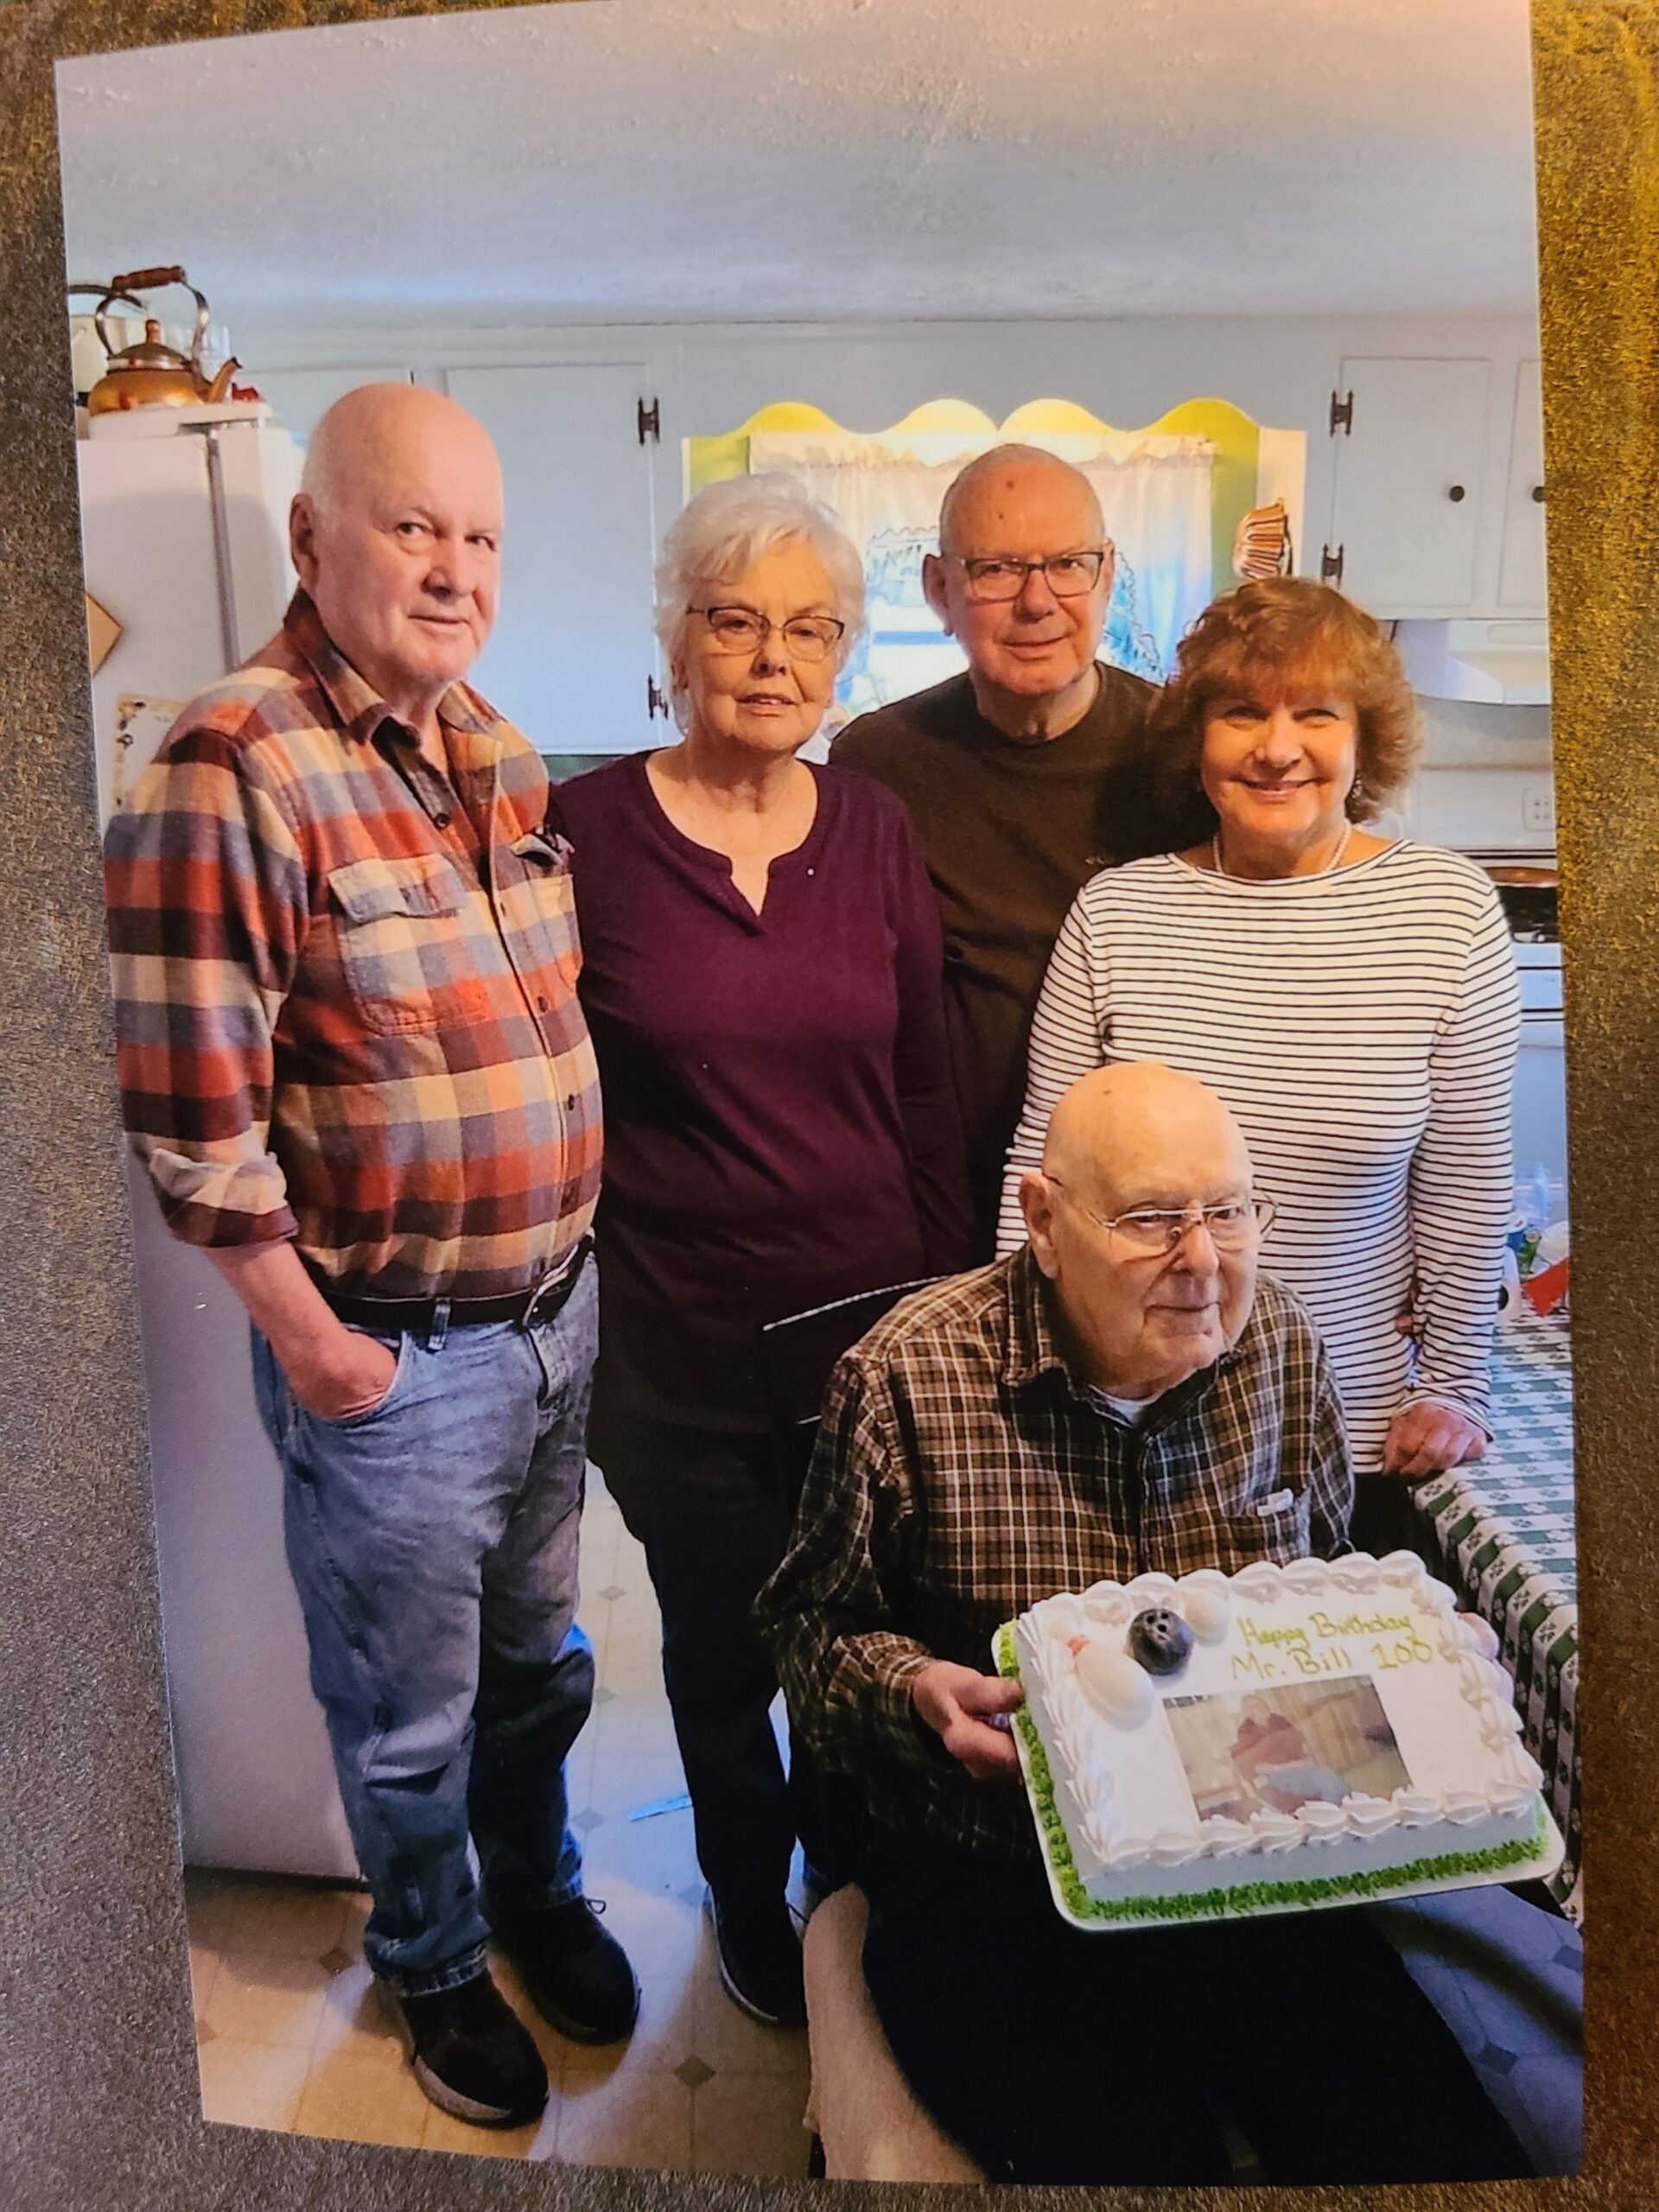 Carroll, Linda, Garry, Darlene, with Bill and his cake